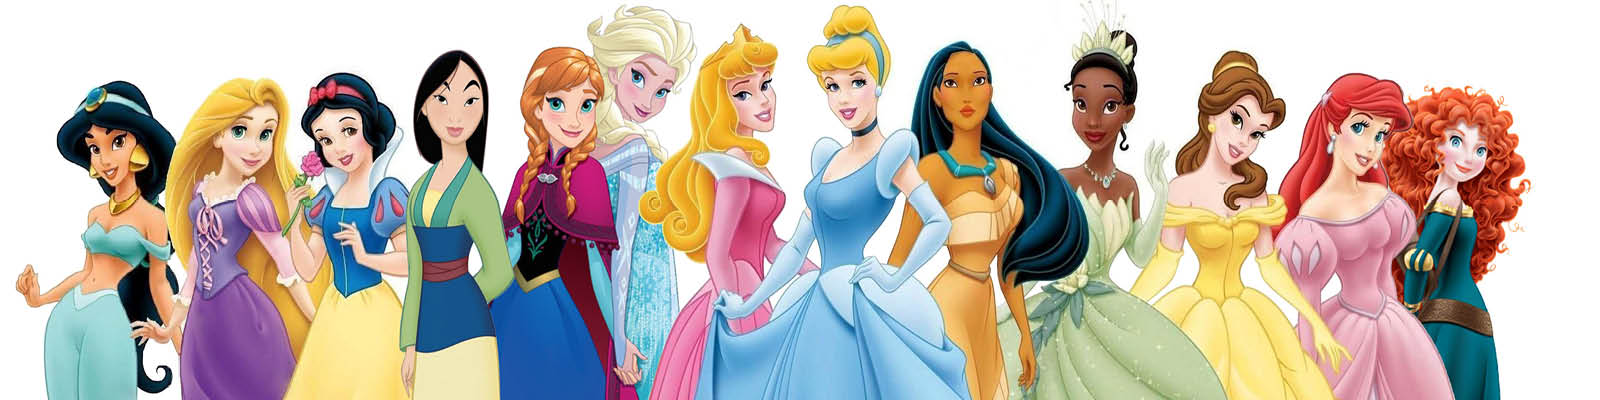 Disney Princess Dolls, Frozen Elsa